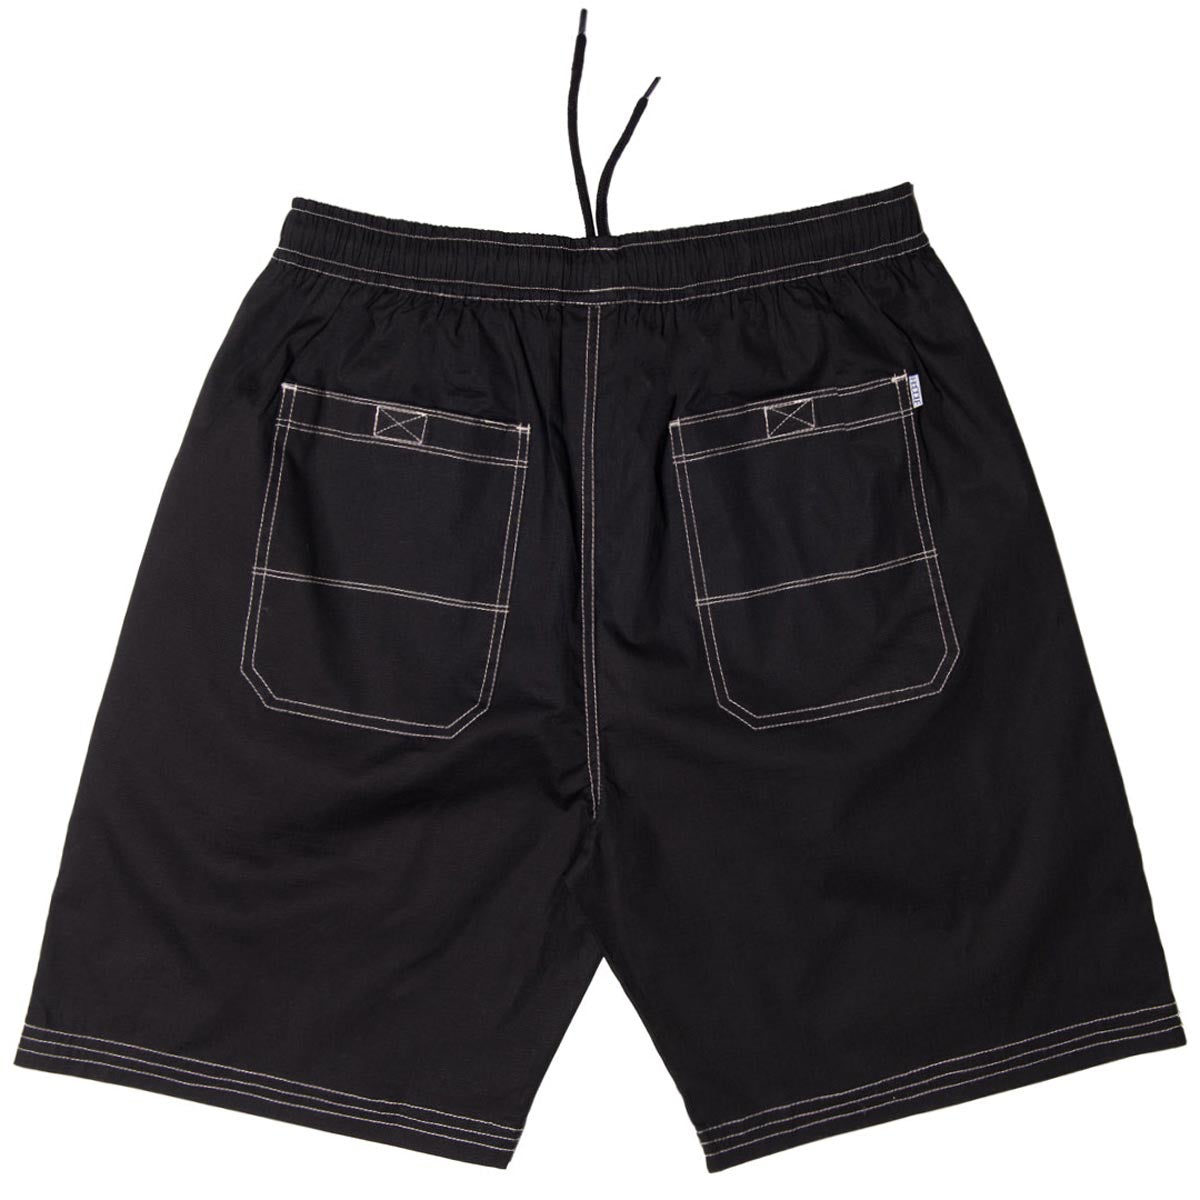 Hoddle Trifid Rip Stop Shorts - Black image 2